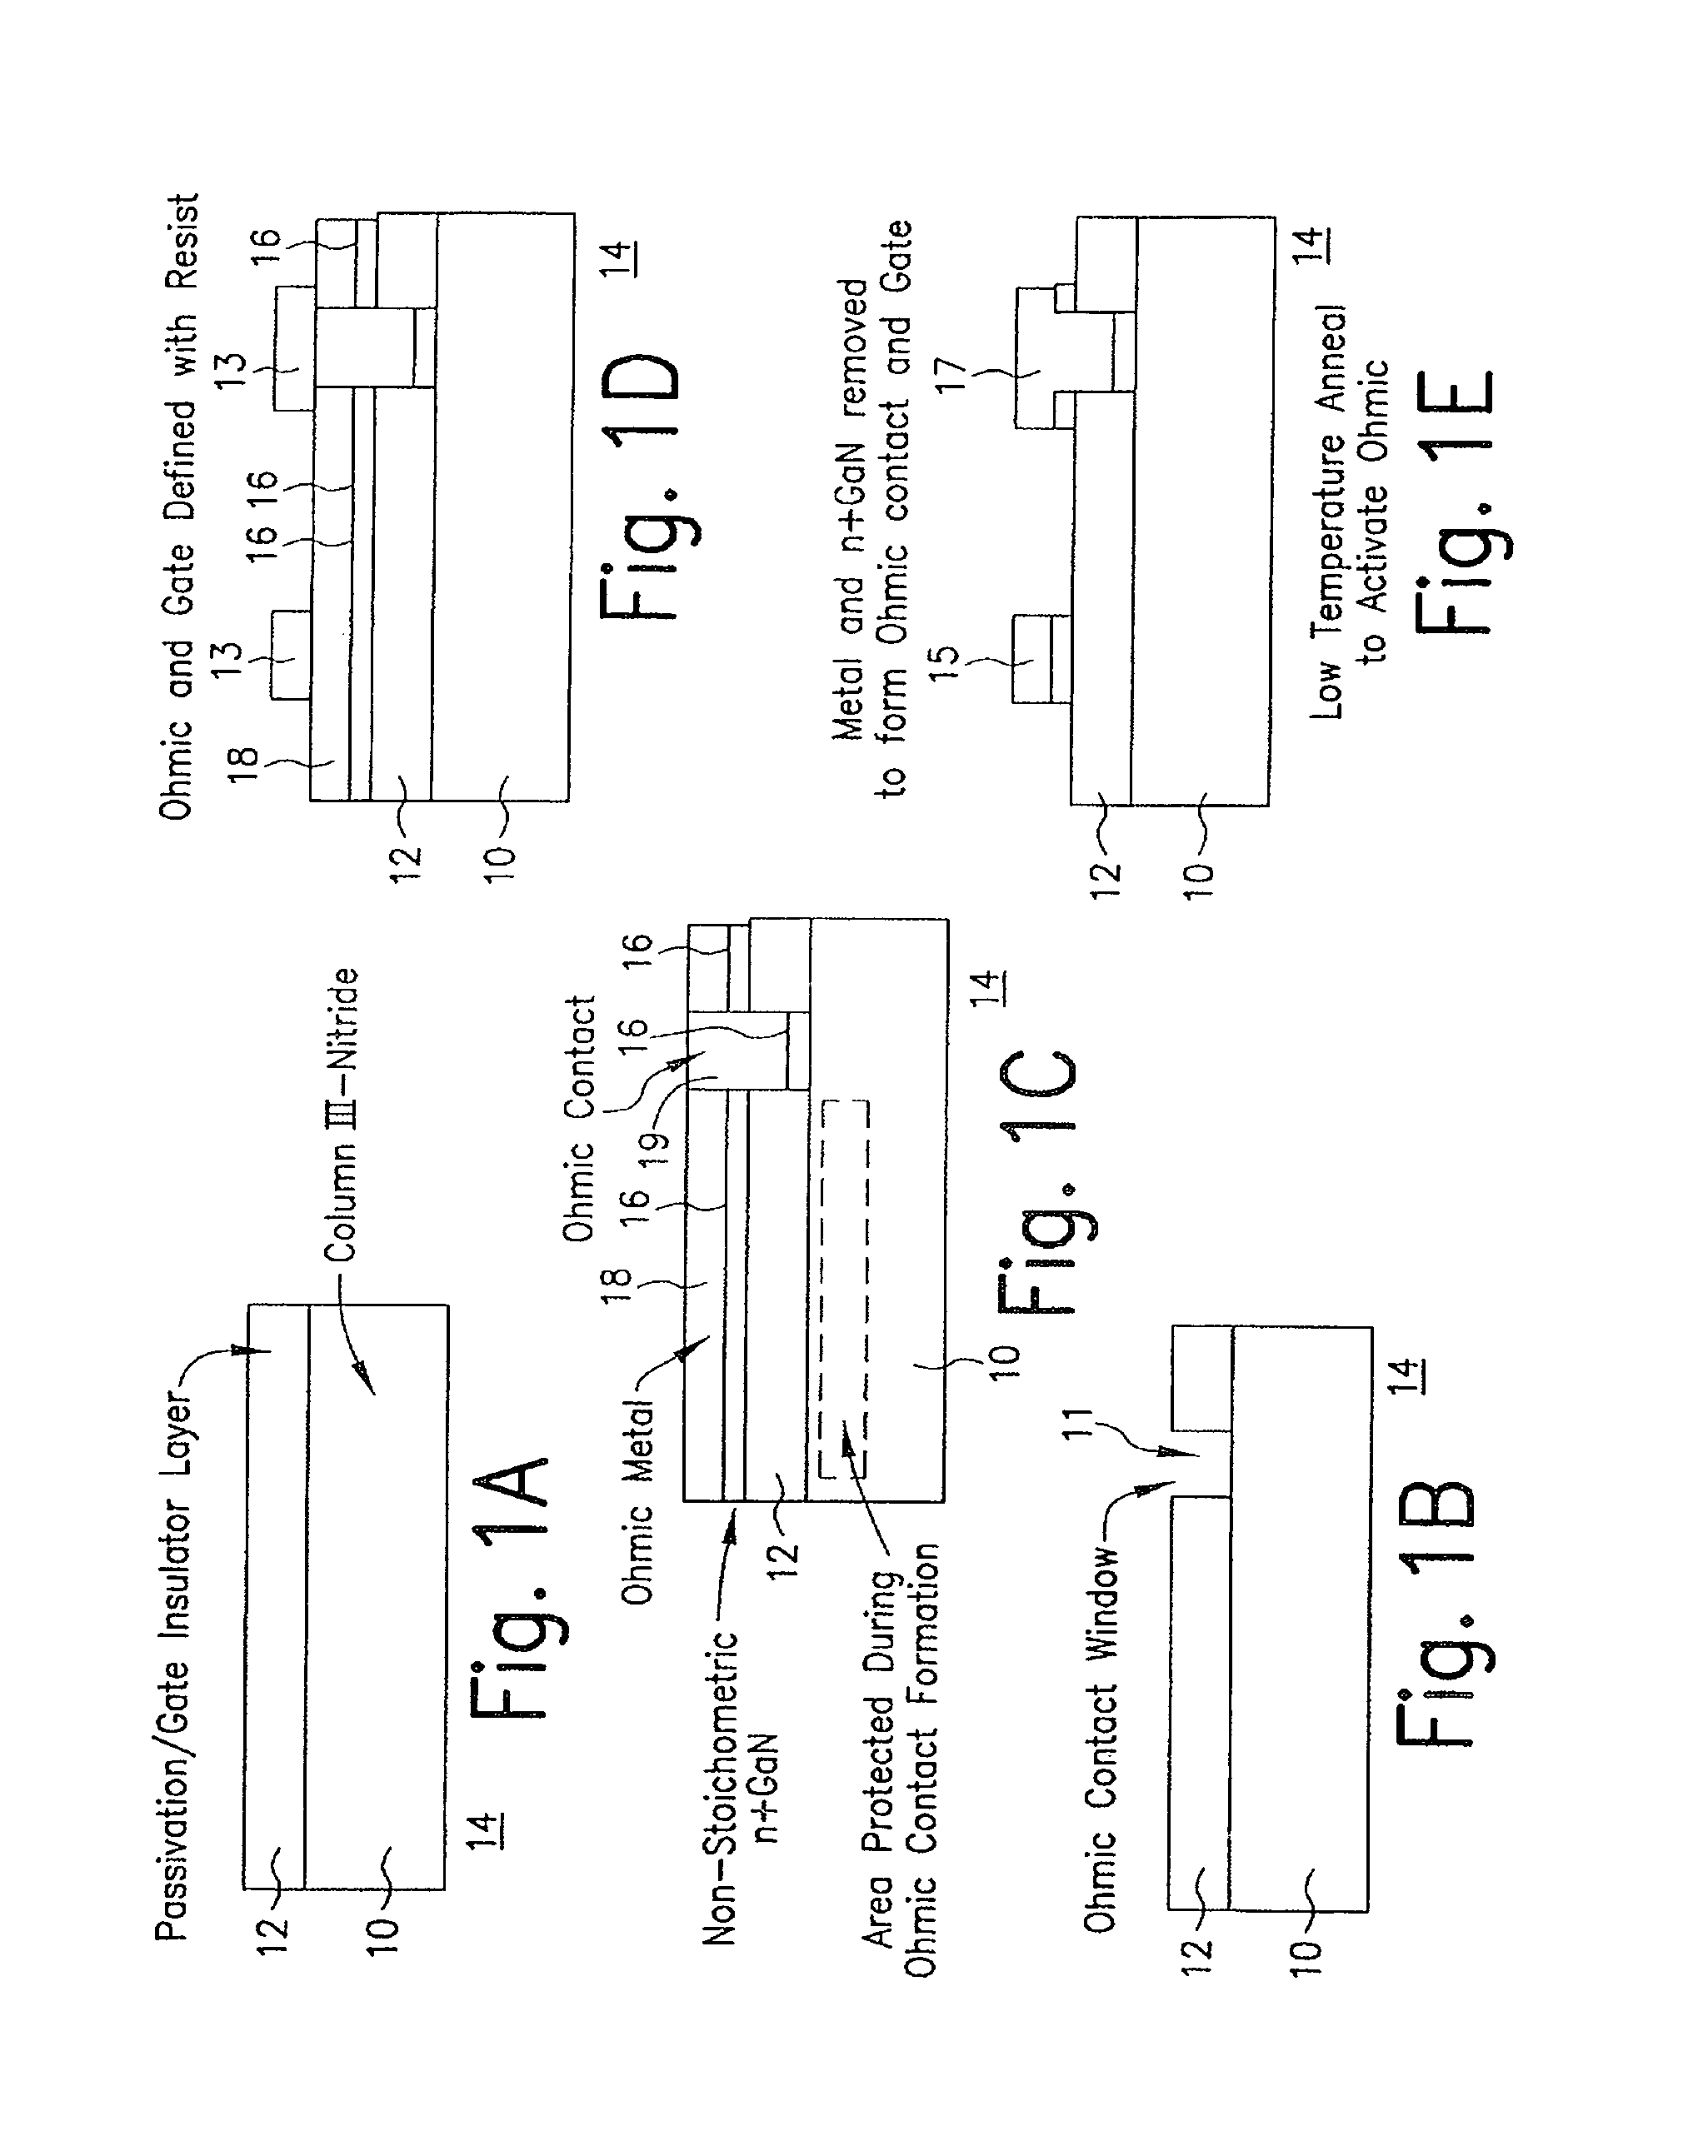 III-nitride device passivation and method